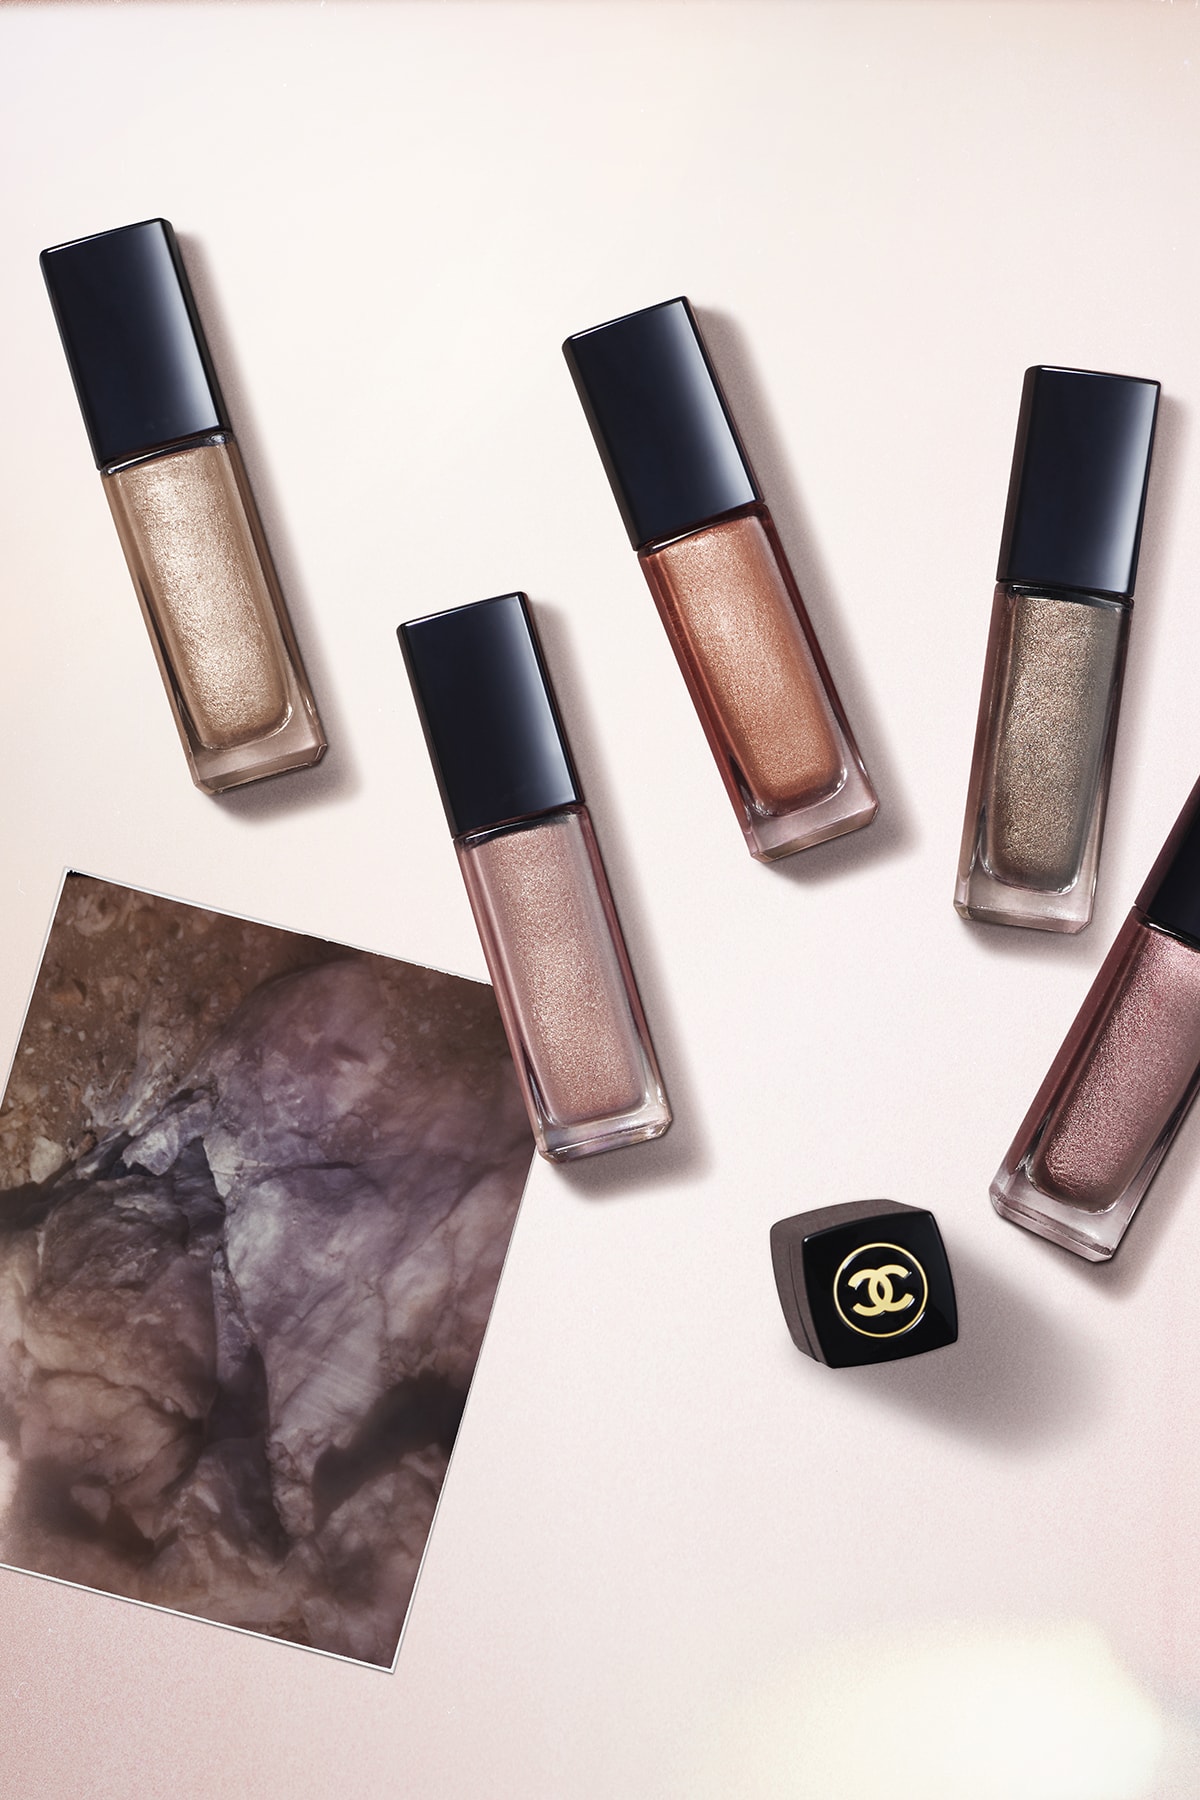 Chanel SS20 "Desert Dream" Makeup Collection Ombre Premiere Laque Liquid Eyeshadow